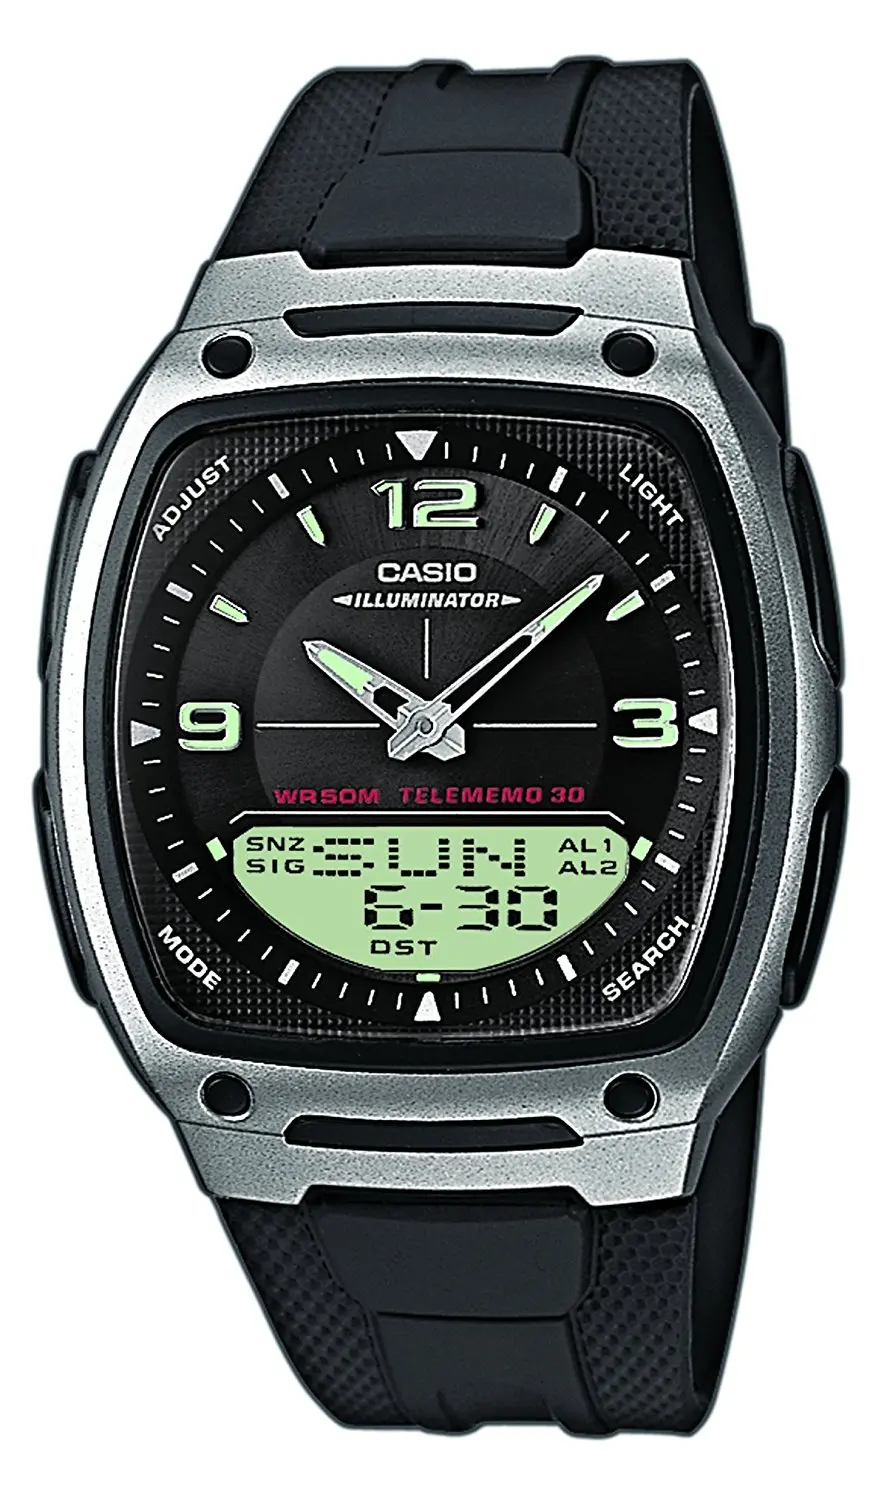 Cheap Casio Illuminator Watch Instruction Manual, find Casio